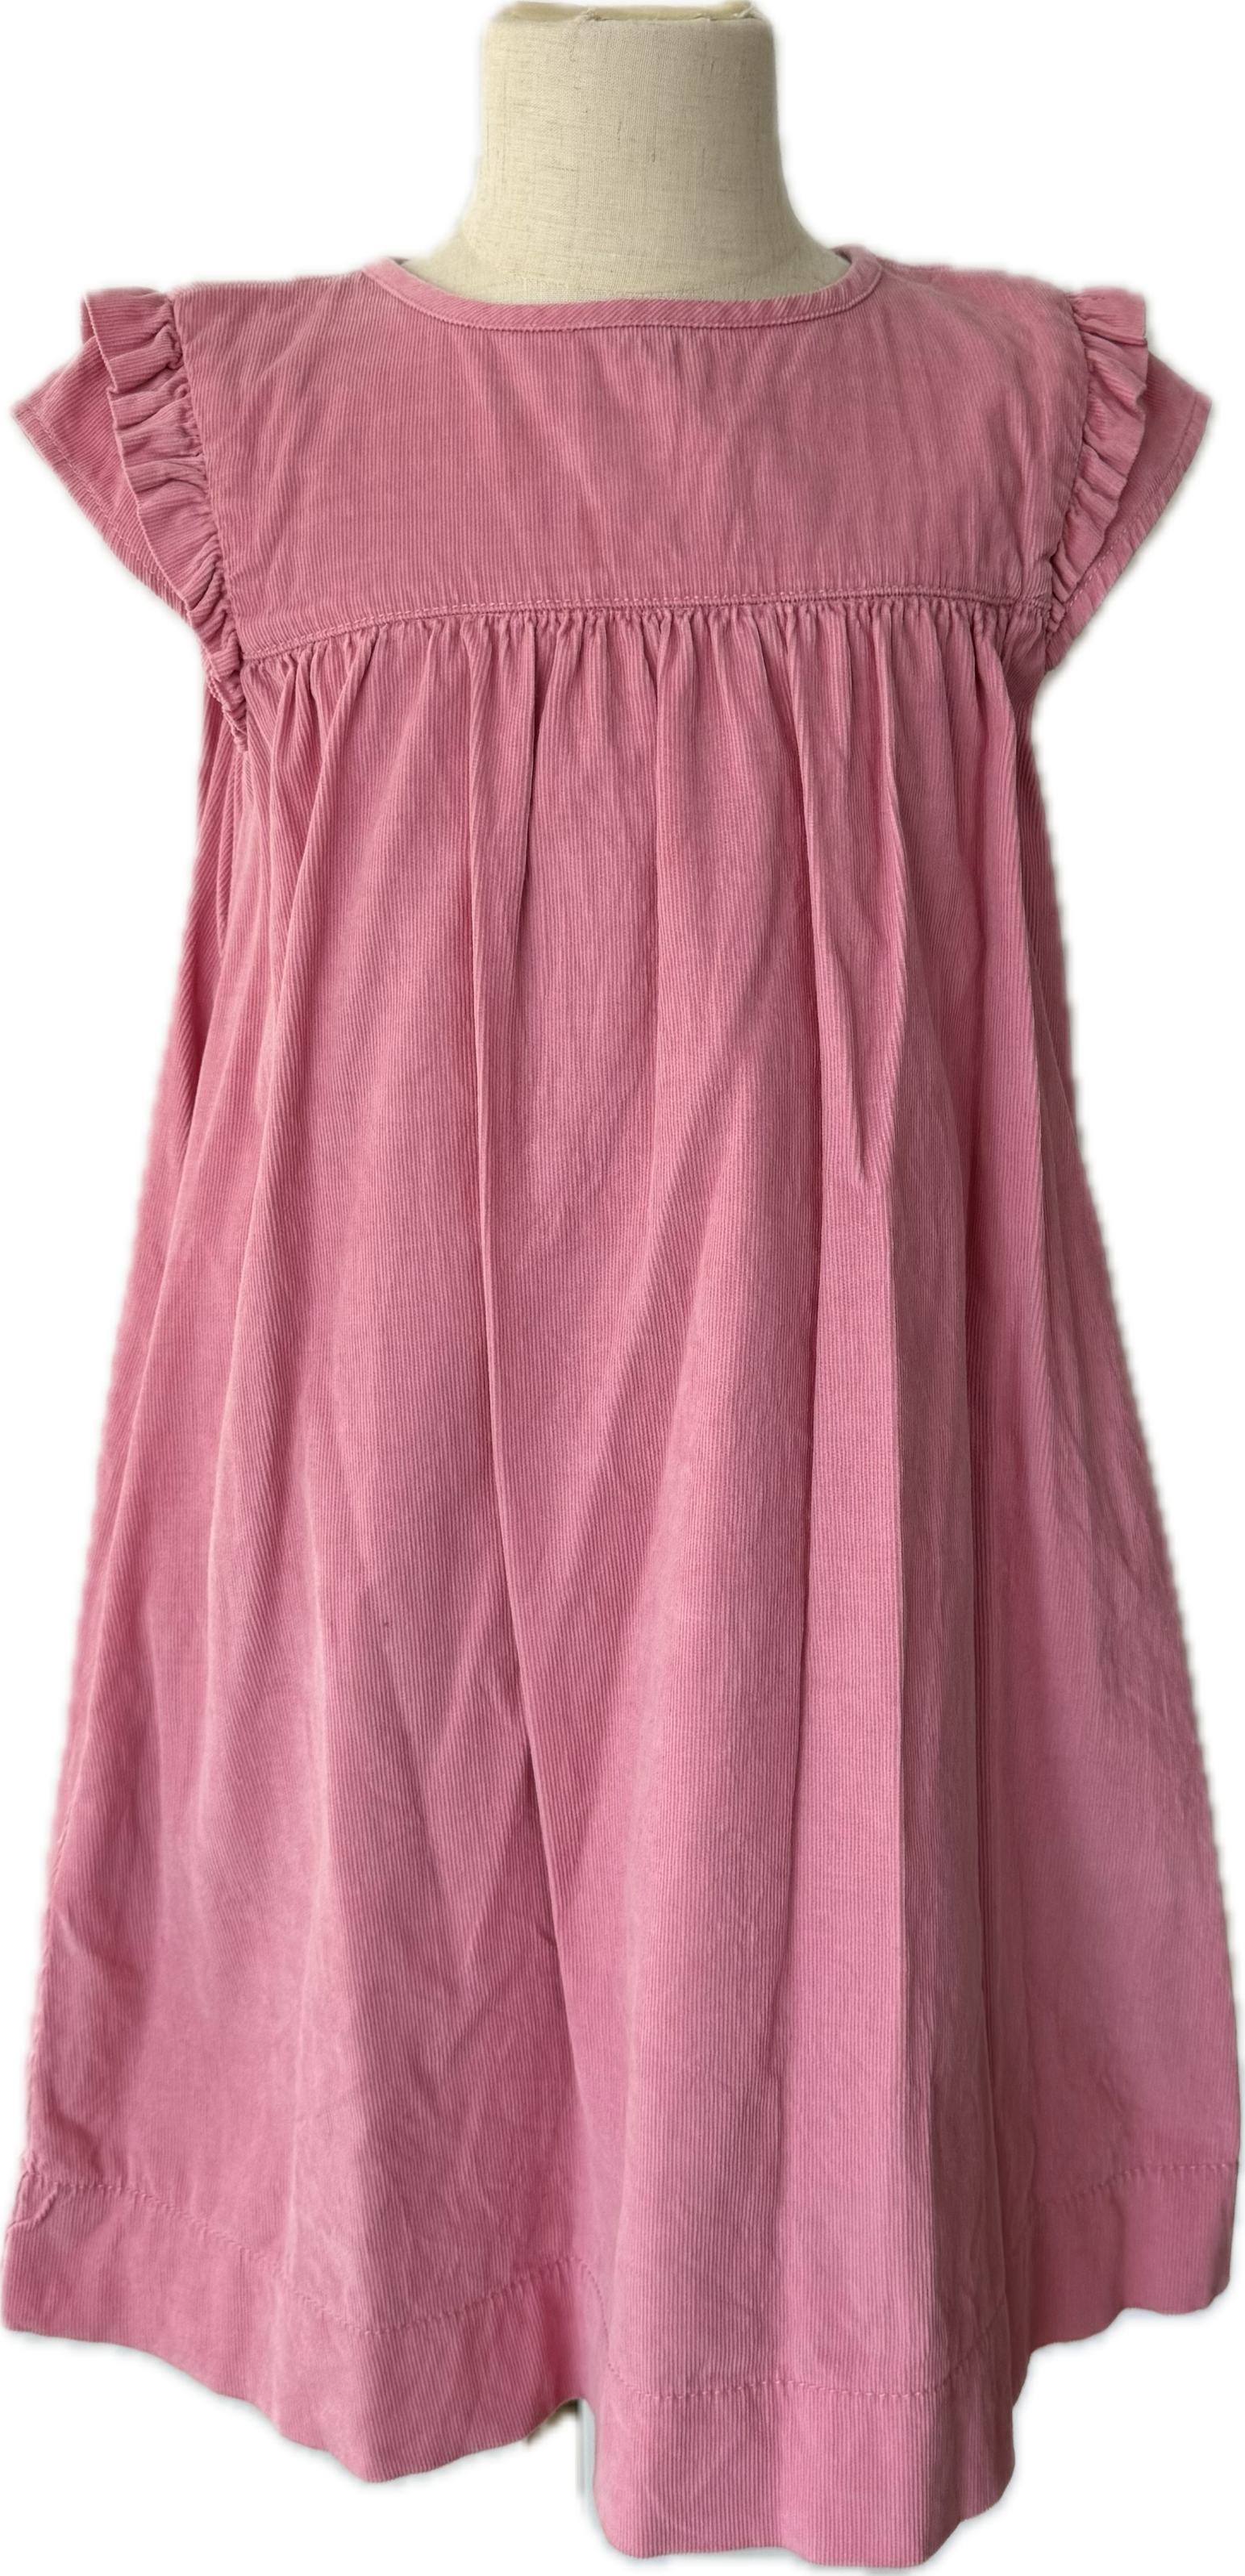 Mini Boden Corduroy Dress, Pink Girls Size 7/8